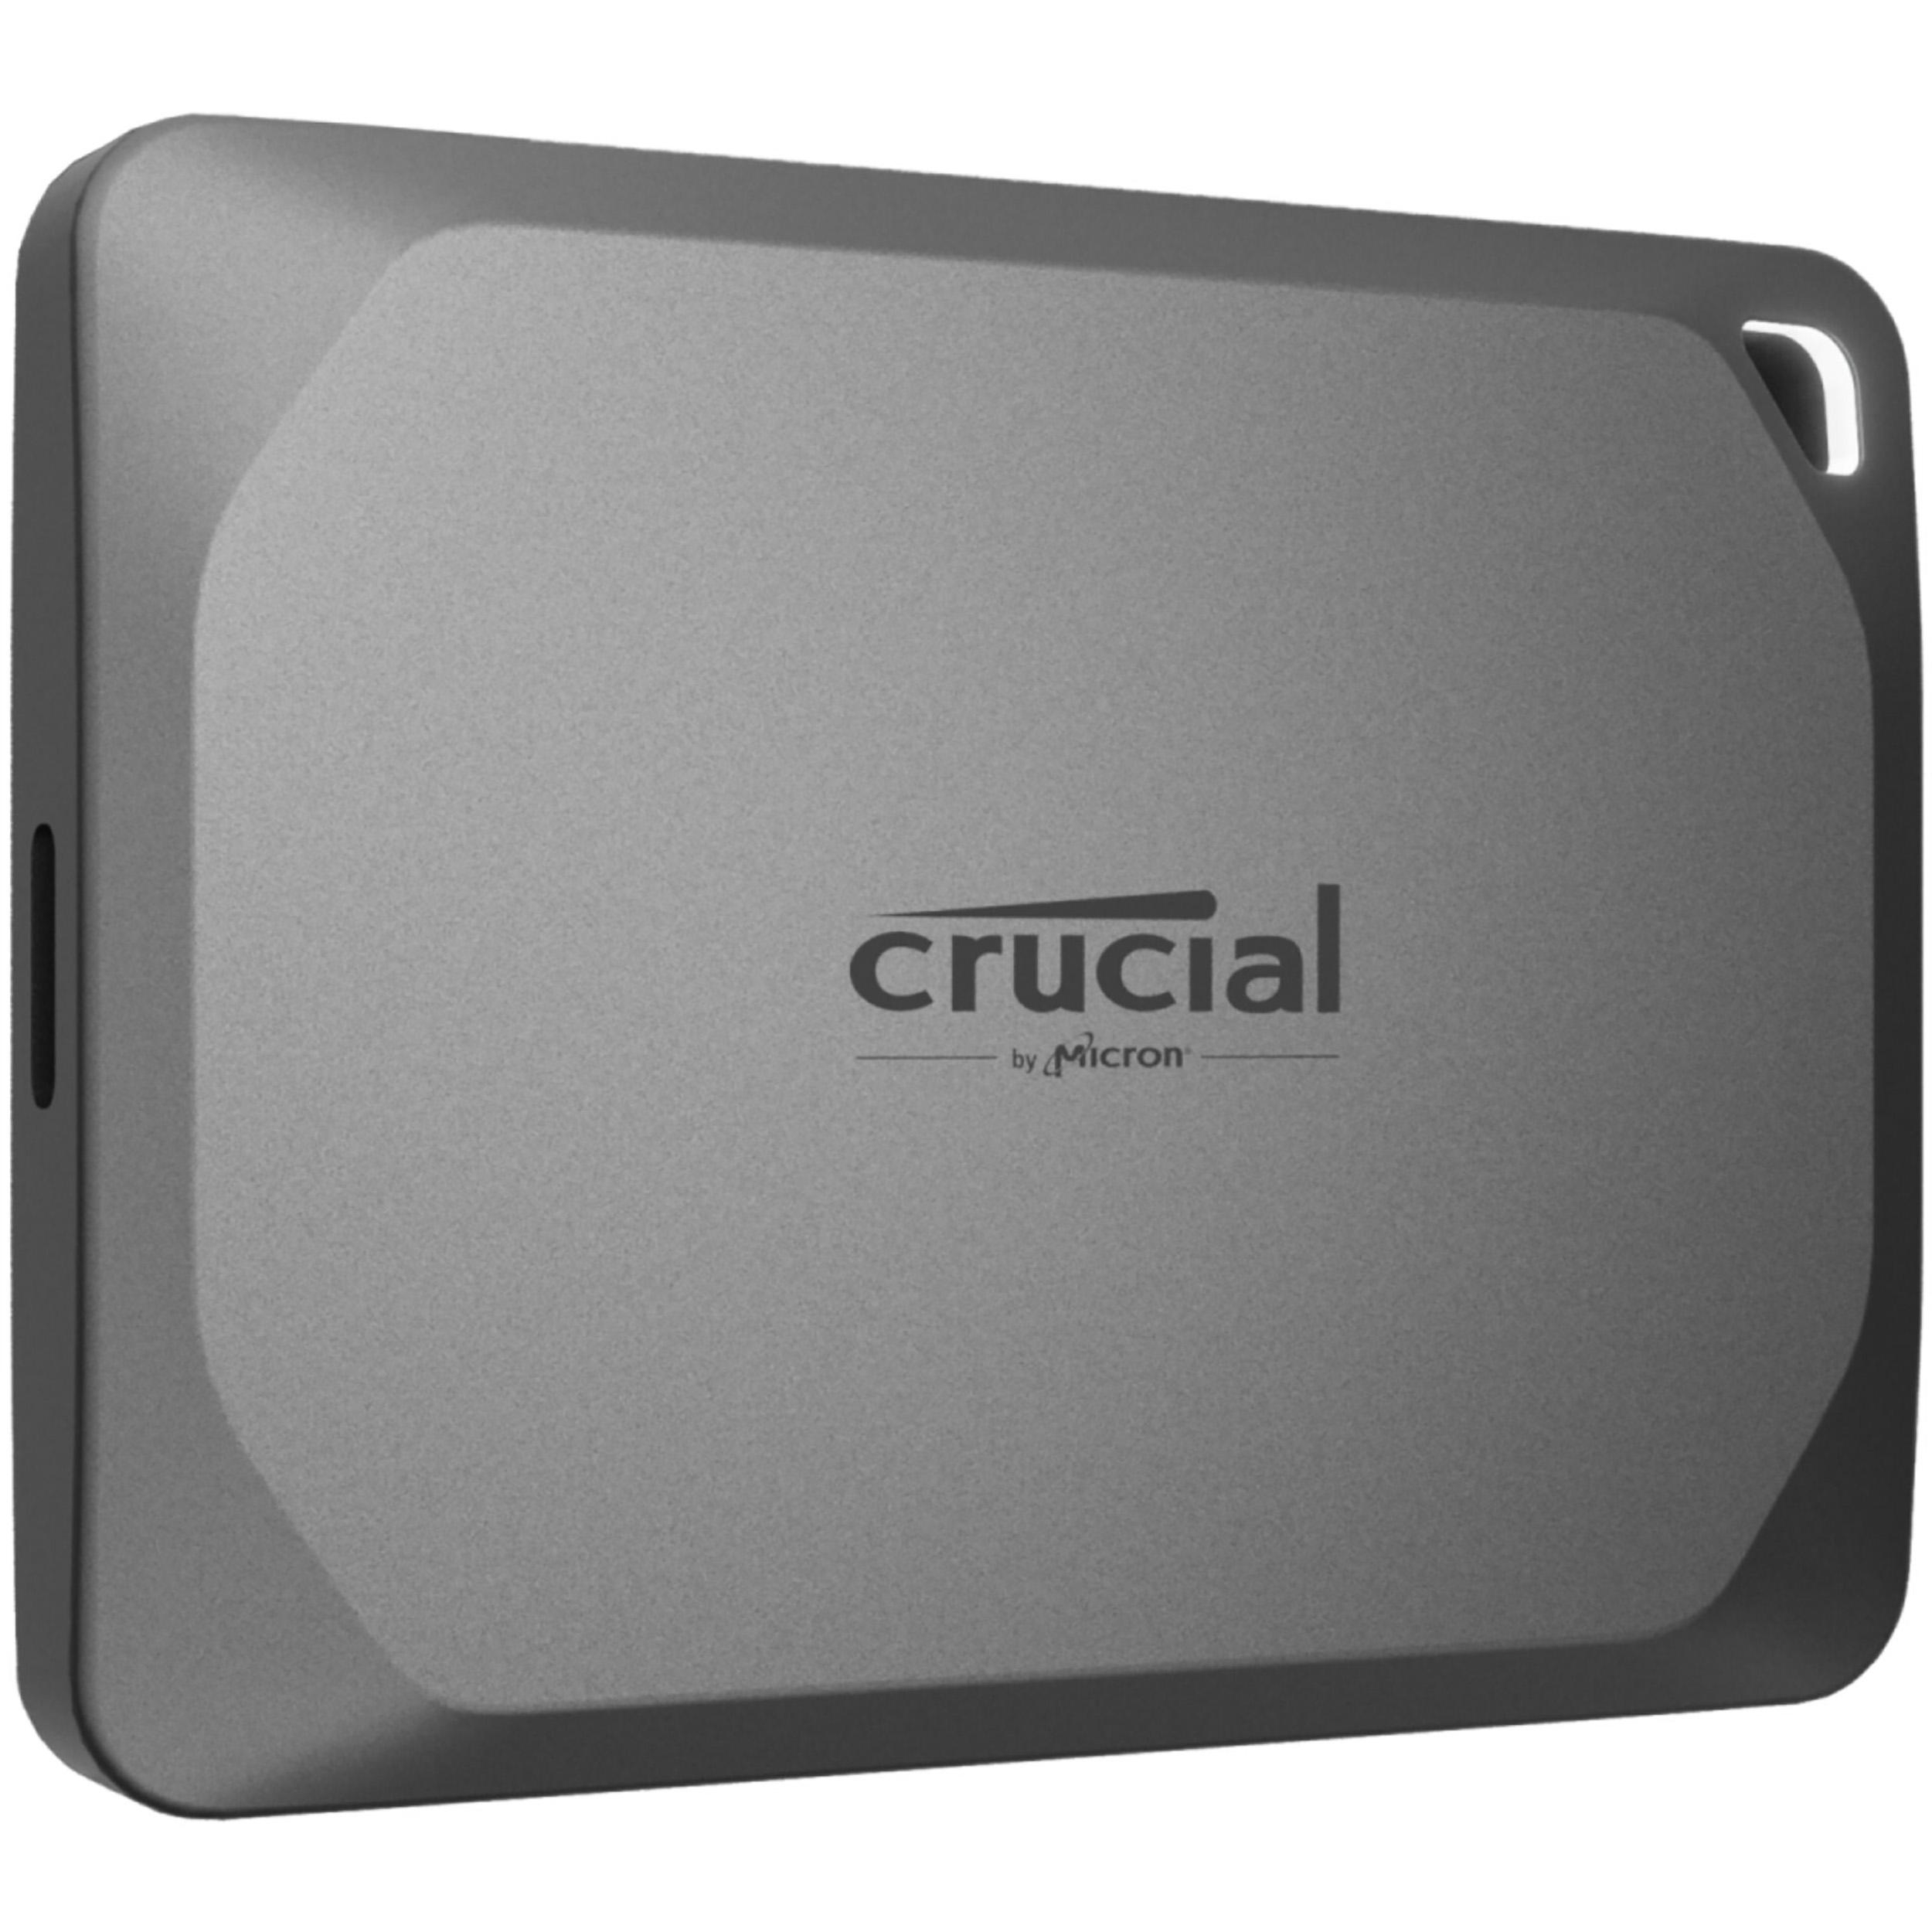 X9 CRUCIAL Pro extern, Festplatte, 2 SSD, TB Grau